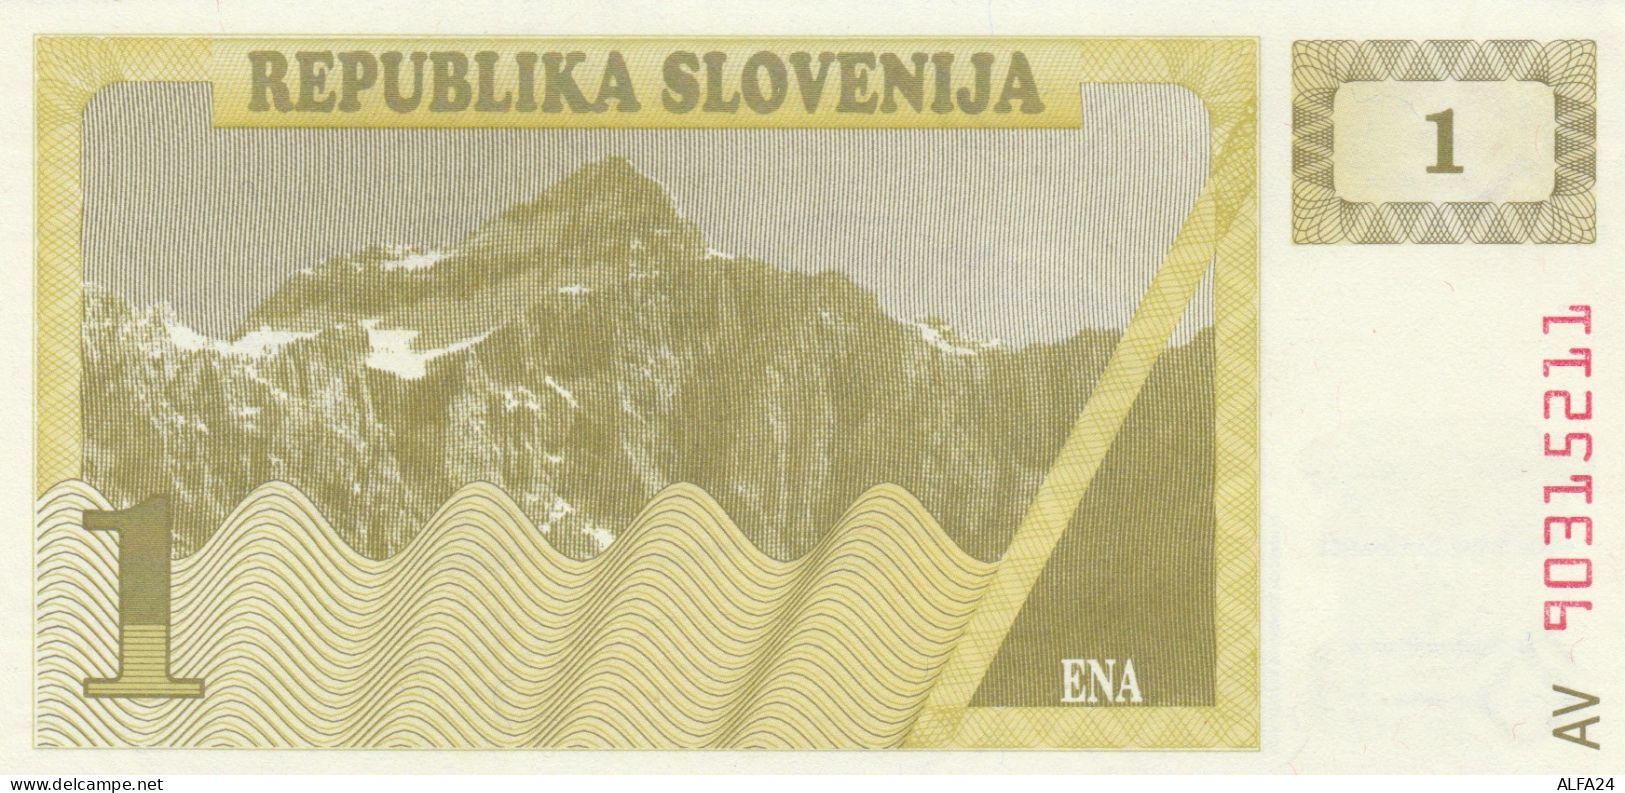 BANCONOTA SLOVENIA 1 UNC (MK744 - Eslovenia